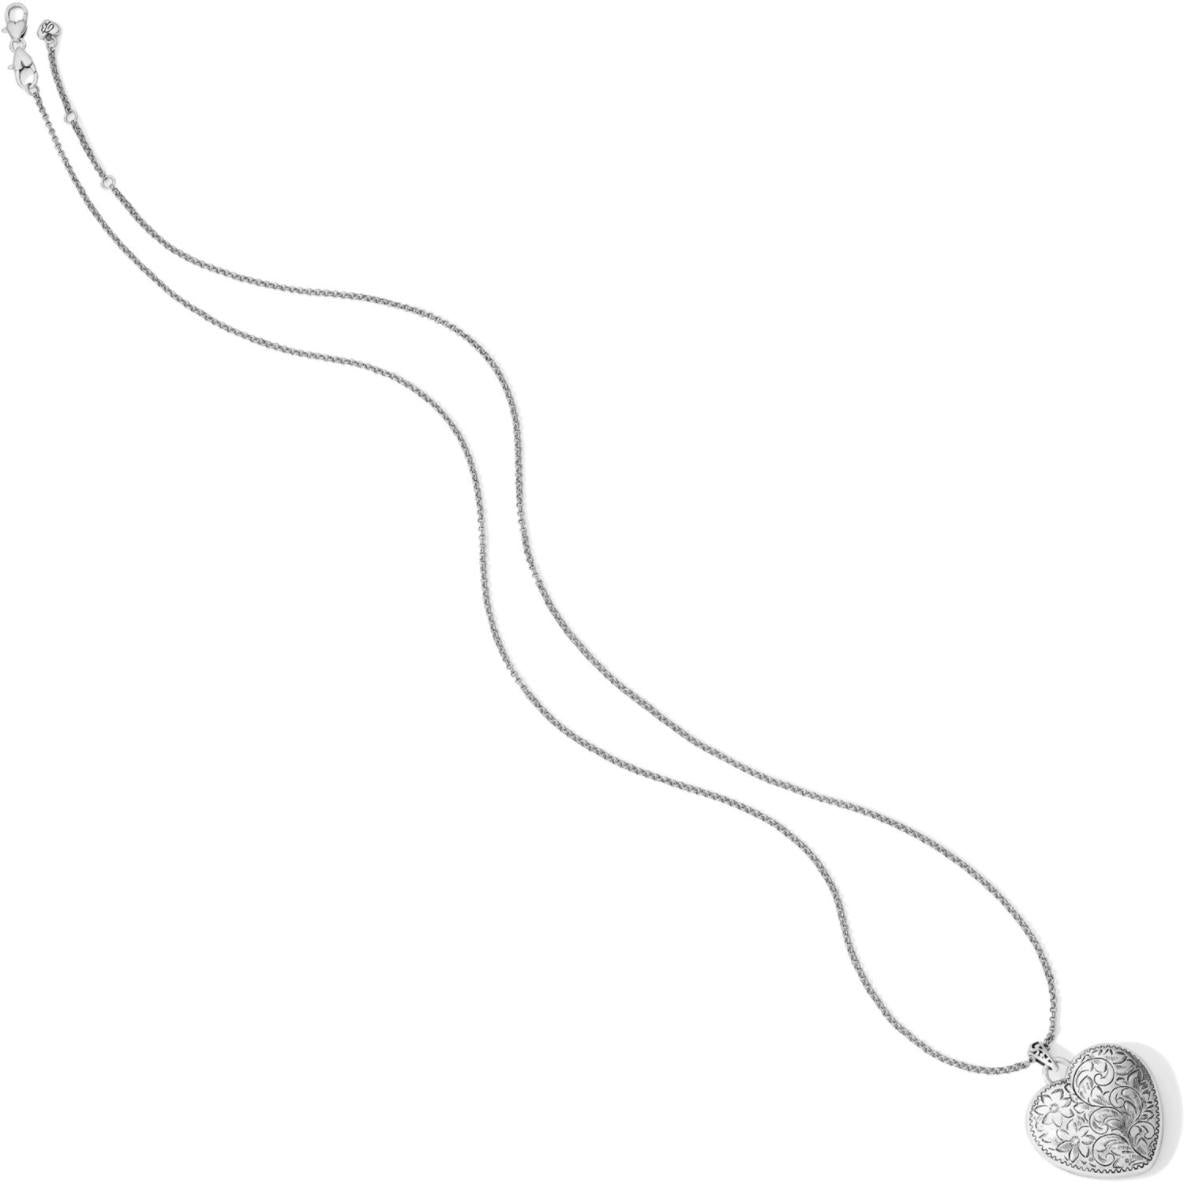 Timeless Heart Convertible Locket Necklace - Zinnias Gift Boutique